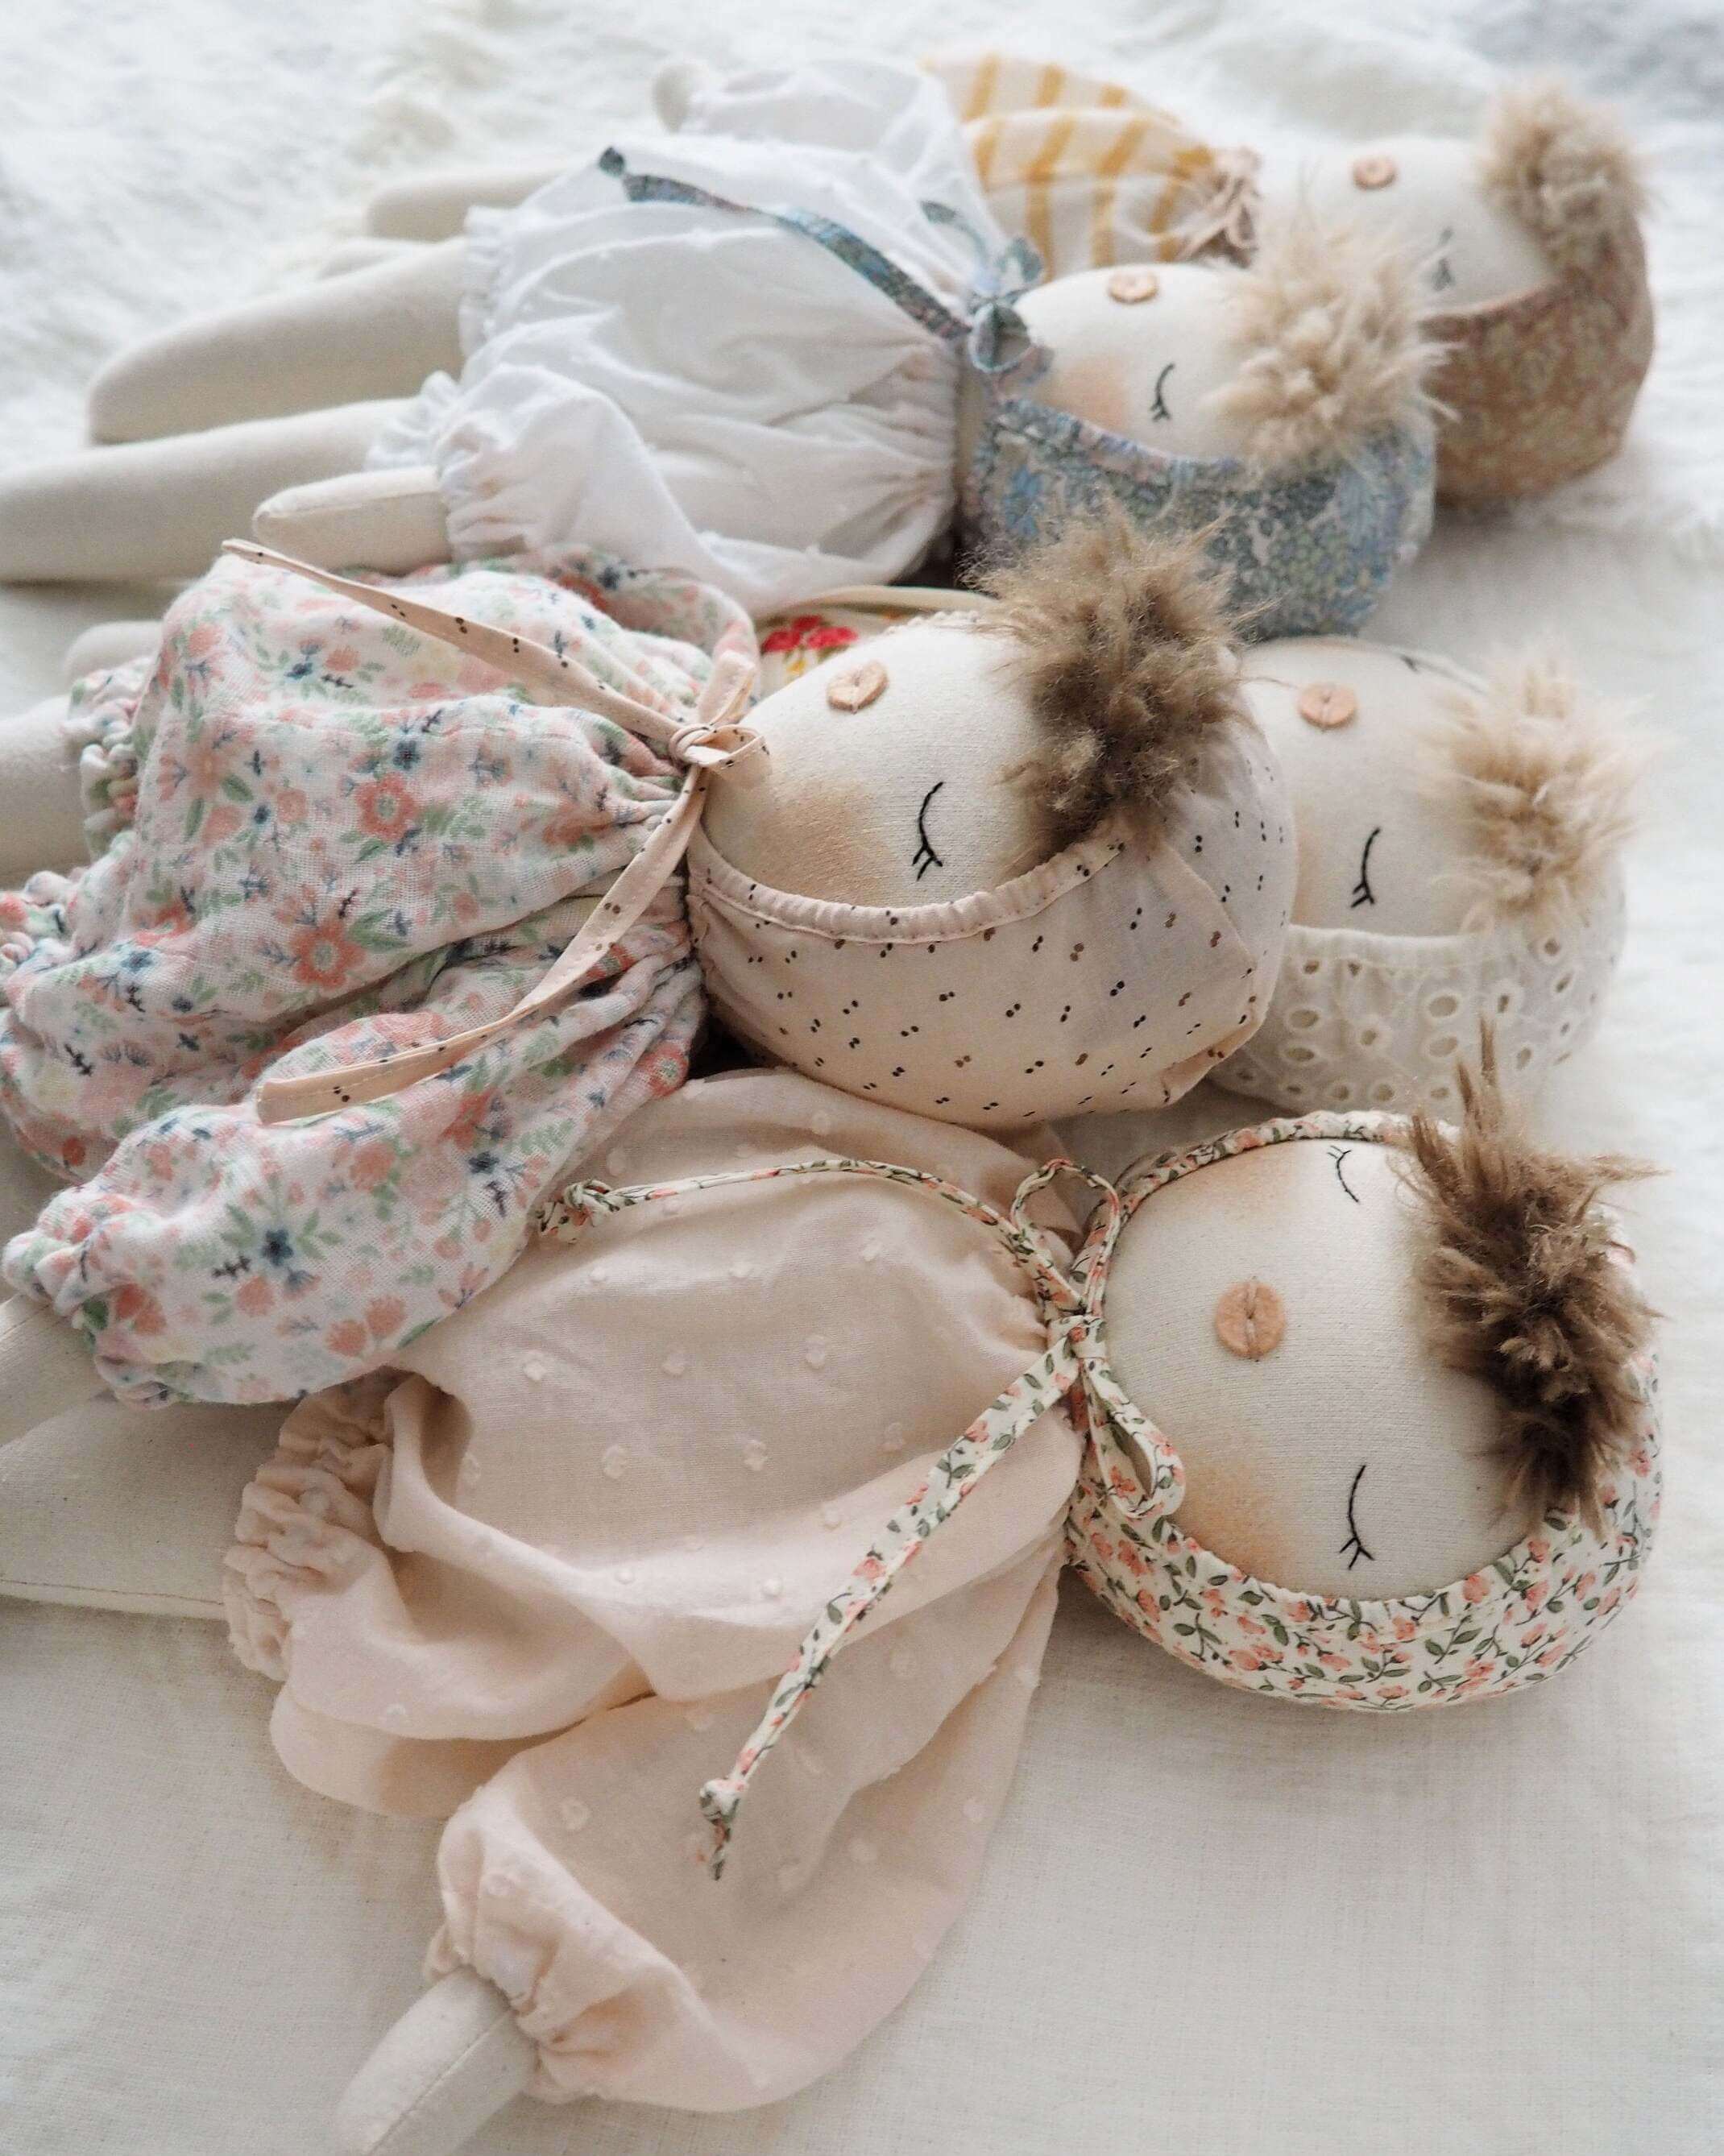 Poetic hand made dolls